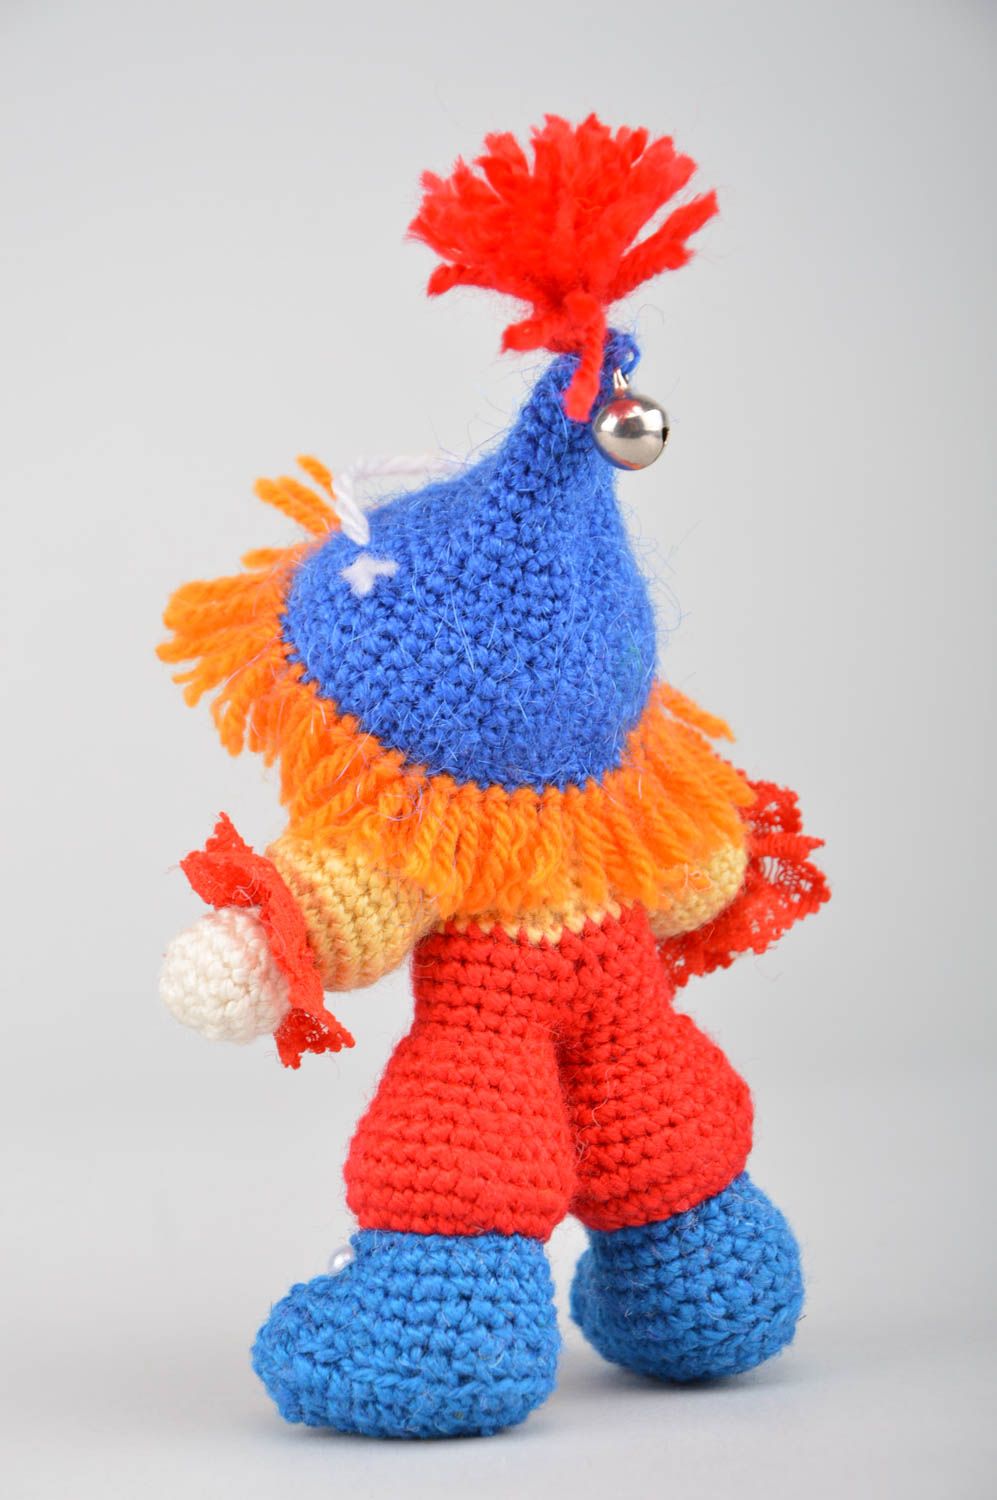 Beautiful homemade crochet soft toy childrens stuffed toy birthday gift ideas photo 3